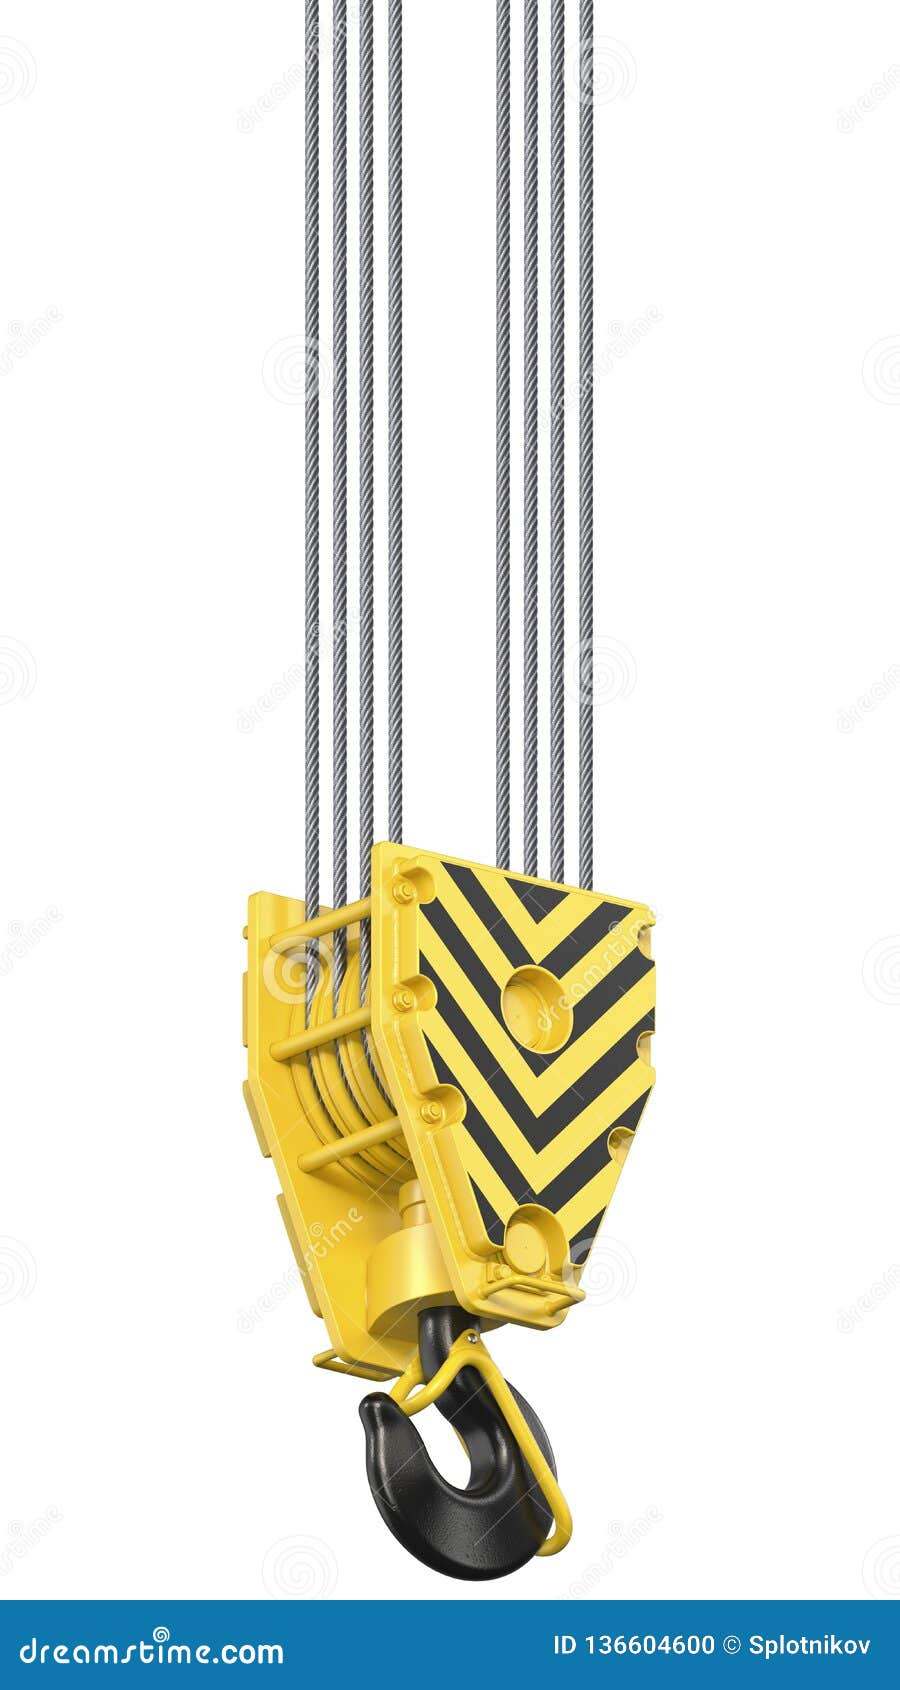 https://thumbs.dreamstime.com/z/big-black-yellow-construction-towe-crane-hook-block-hanging-steel-ropes-d-render-overhead-hookblock-isolated-coverhead-136604600.jpg